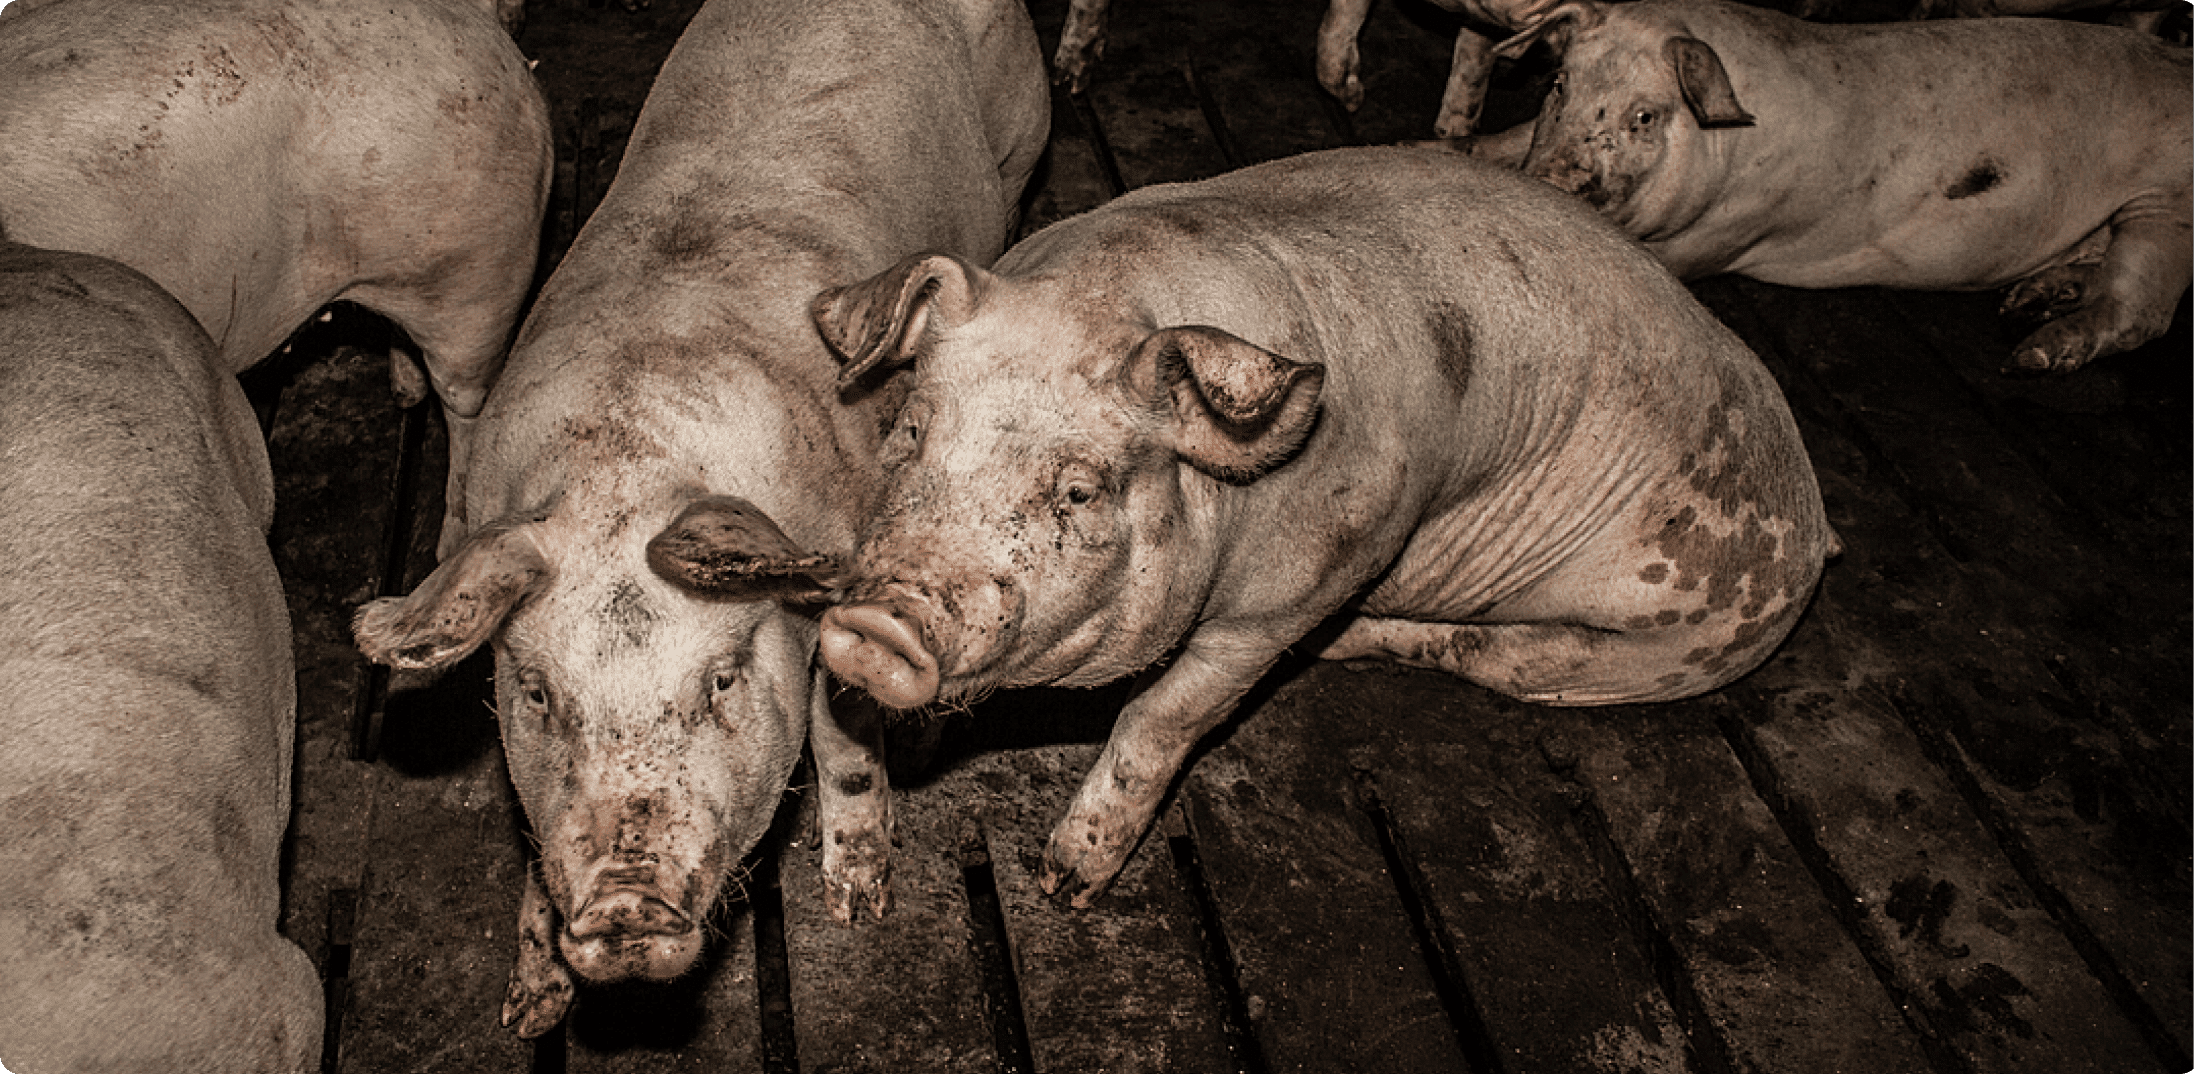 pigs on a factory farm